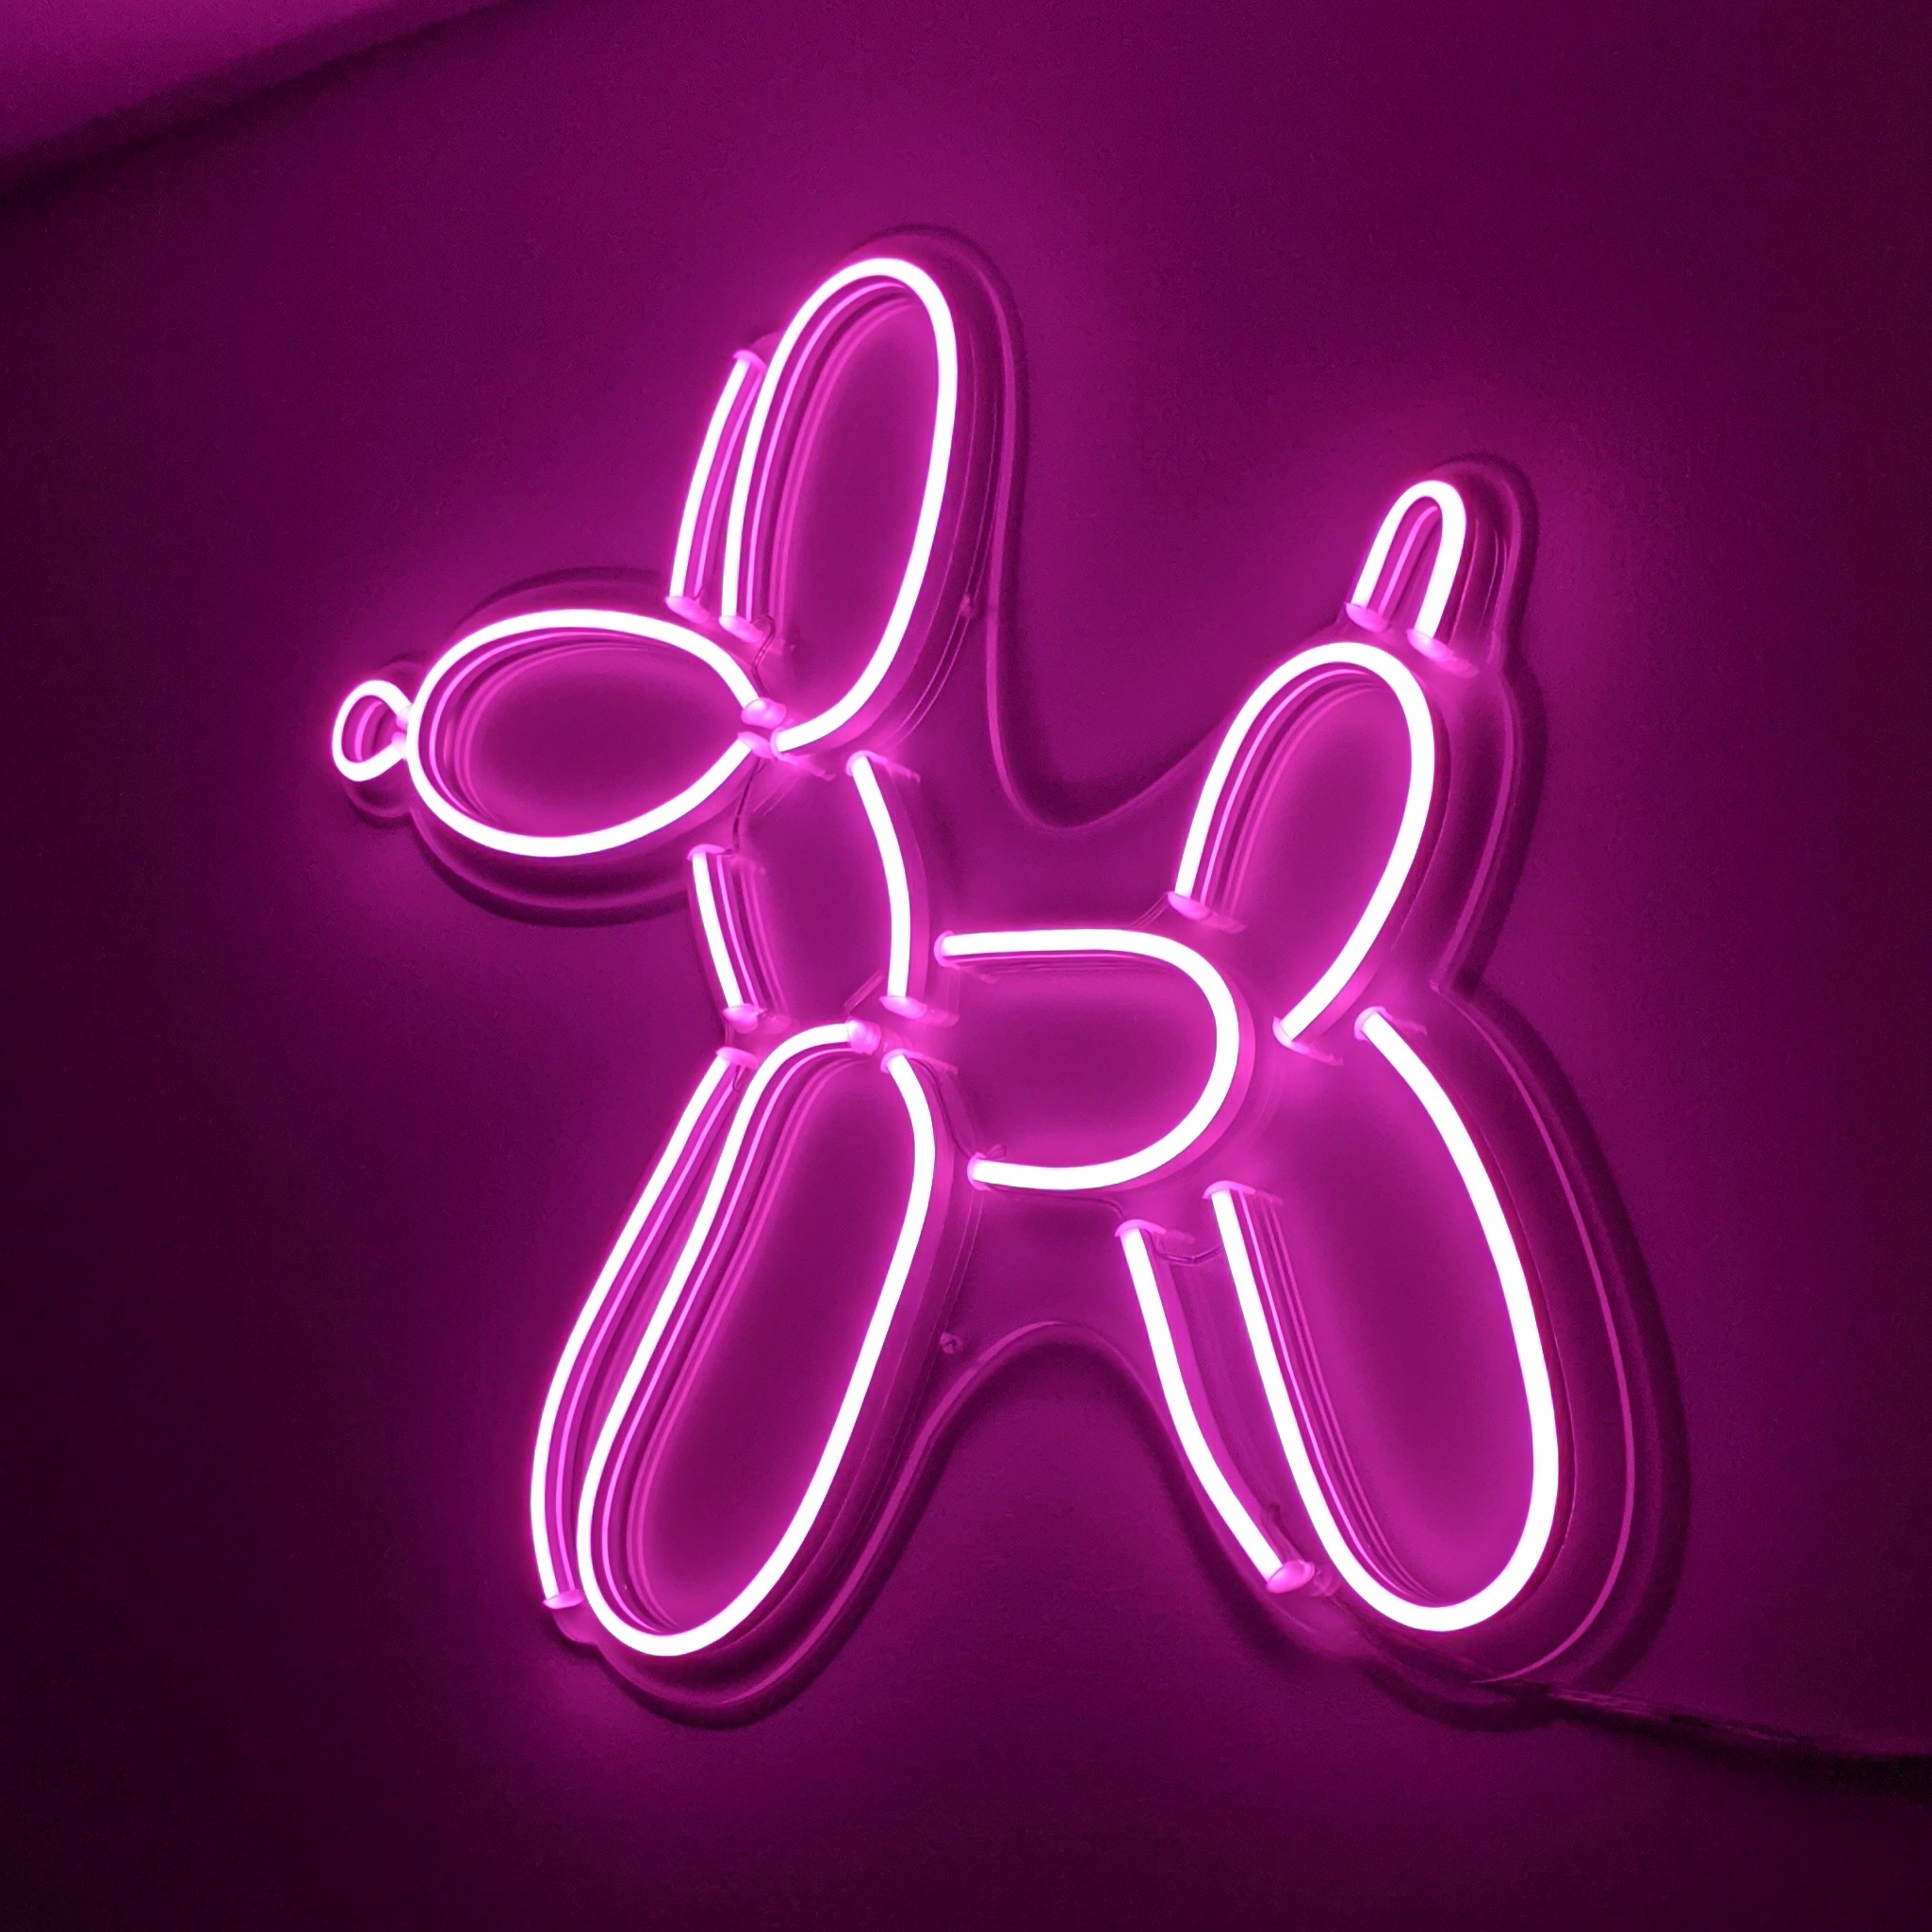 Custom Neon Sign - Koons Balloon Dog